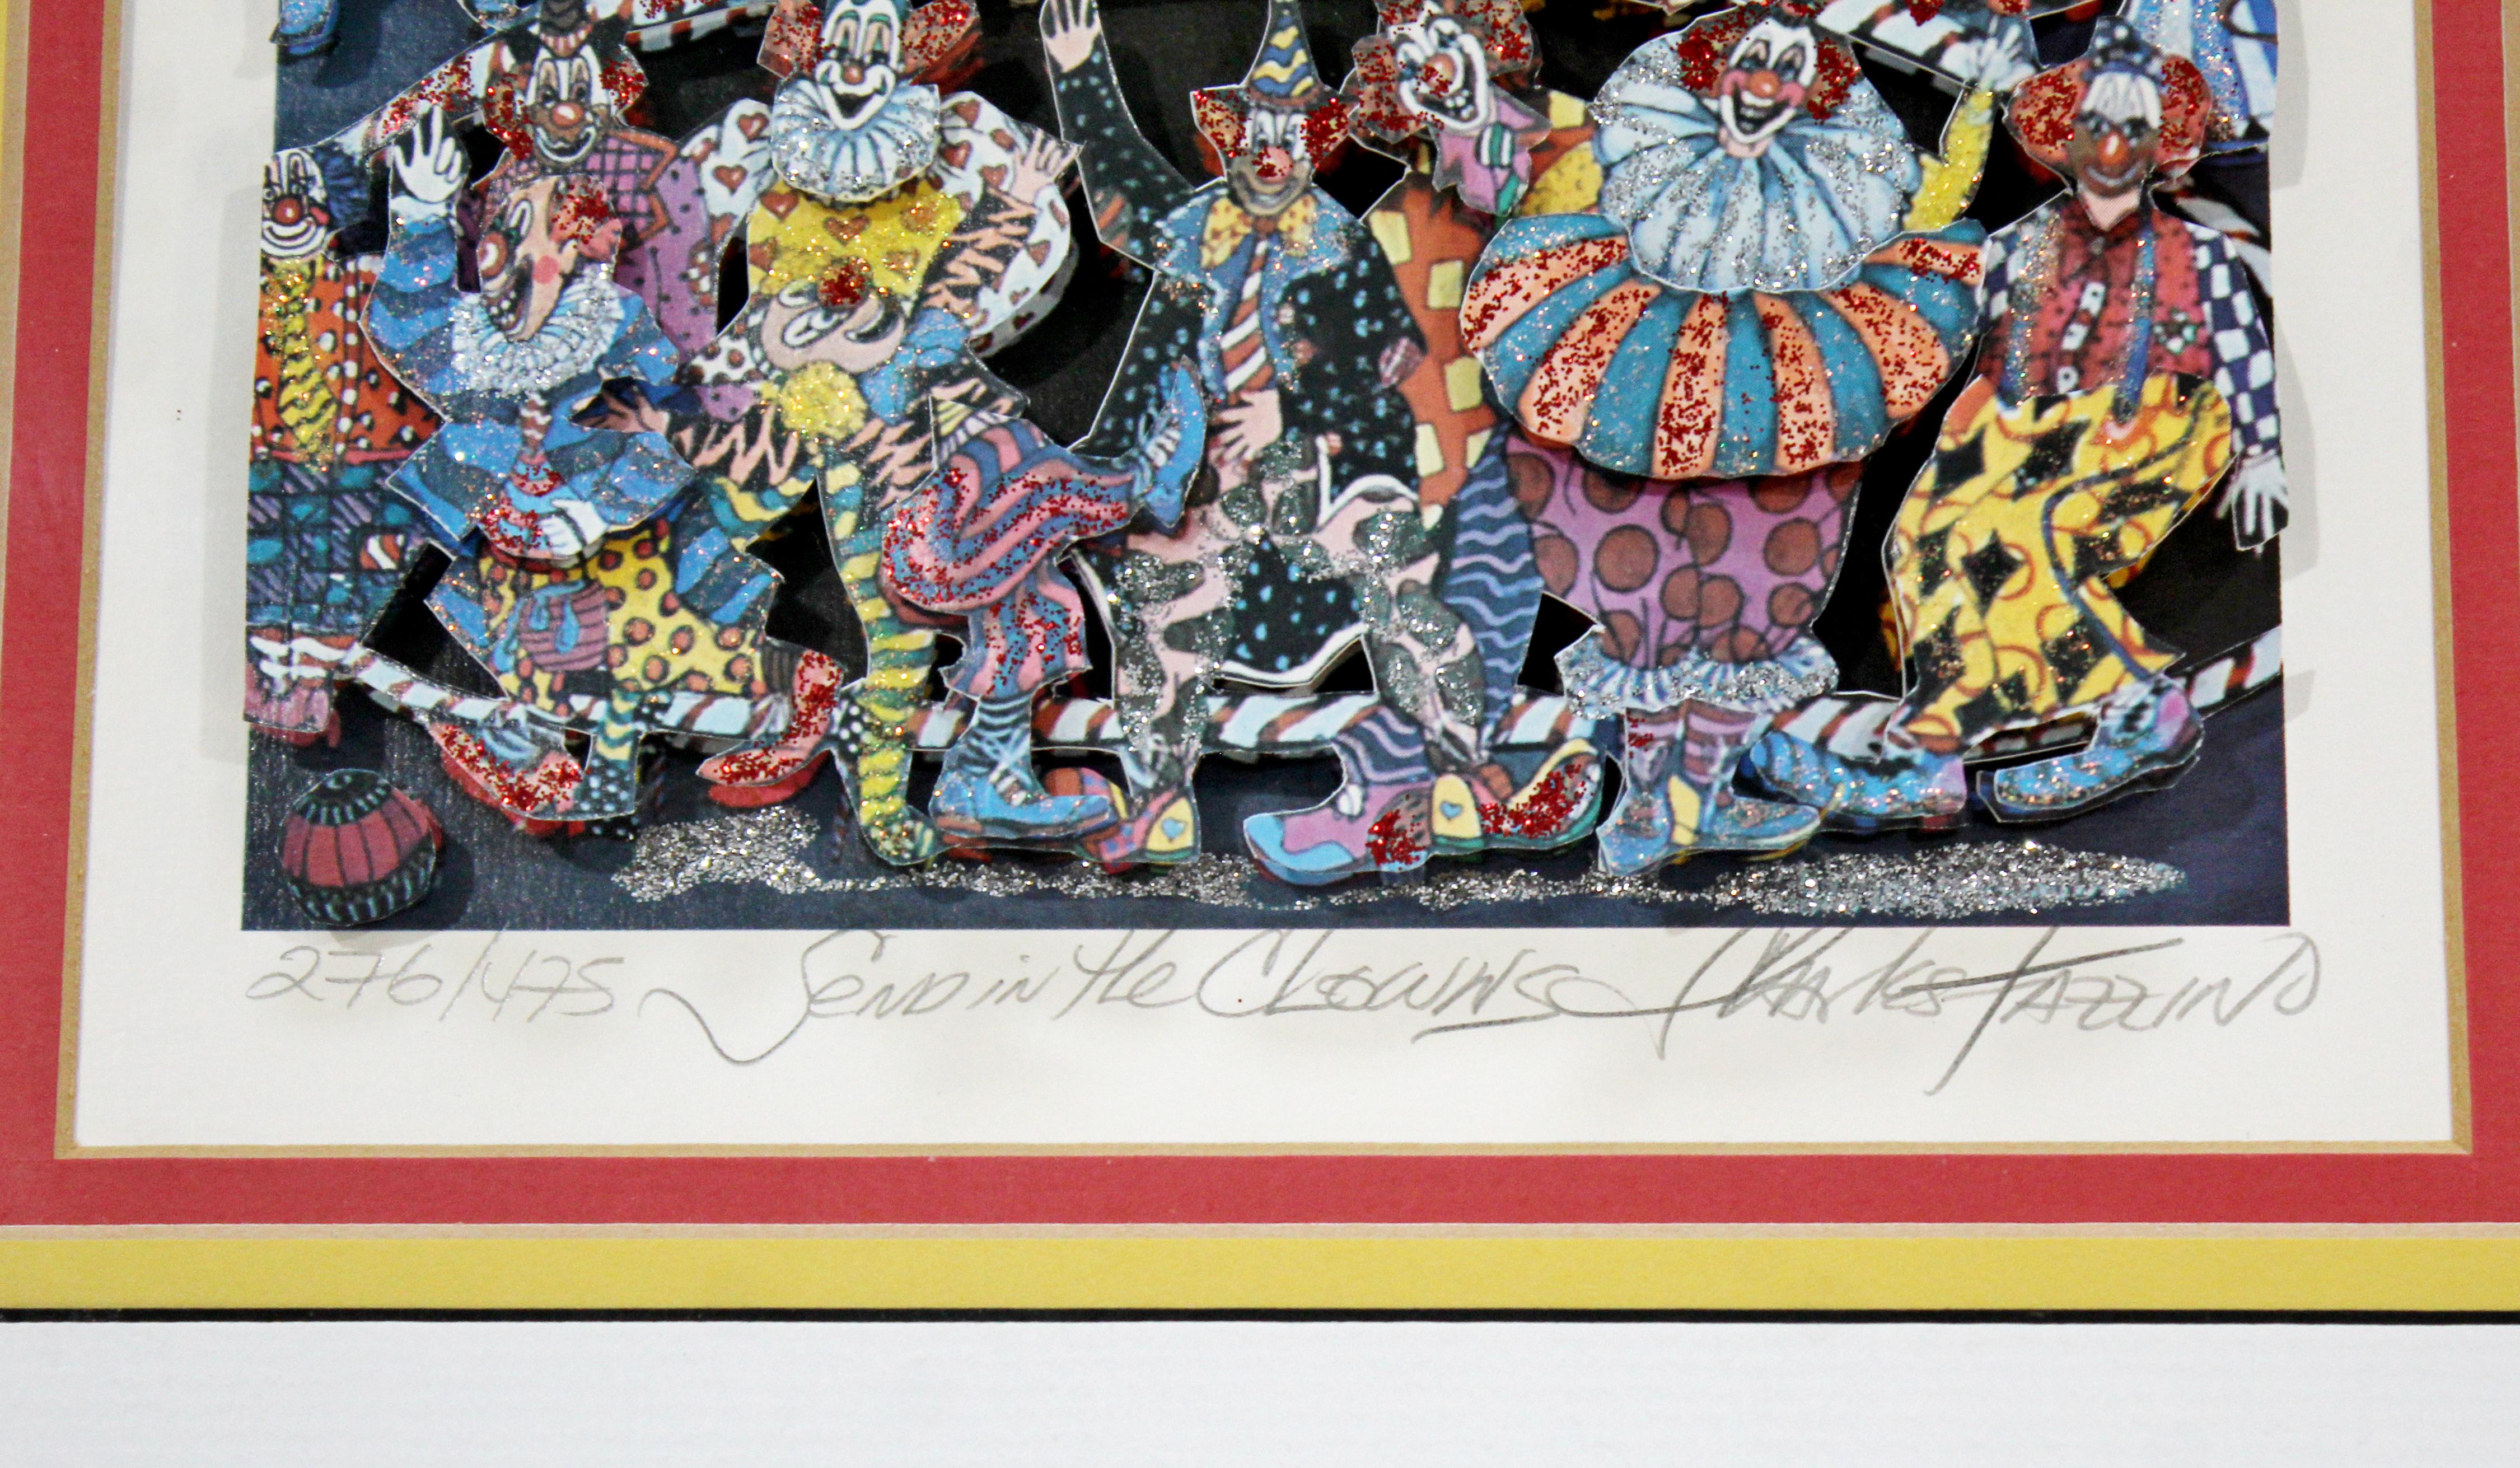 Late 20th Century Contemporary Framed Send Clowns 3D Serigraph Signed Charles Fazzino 276/475 COA